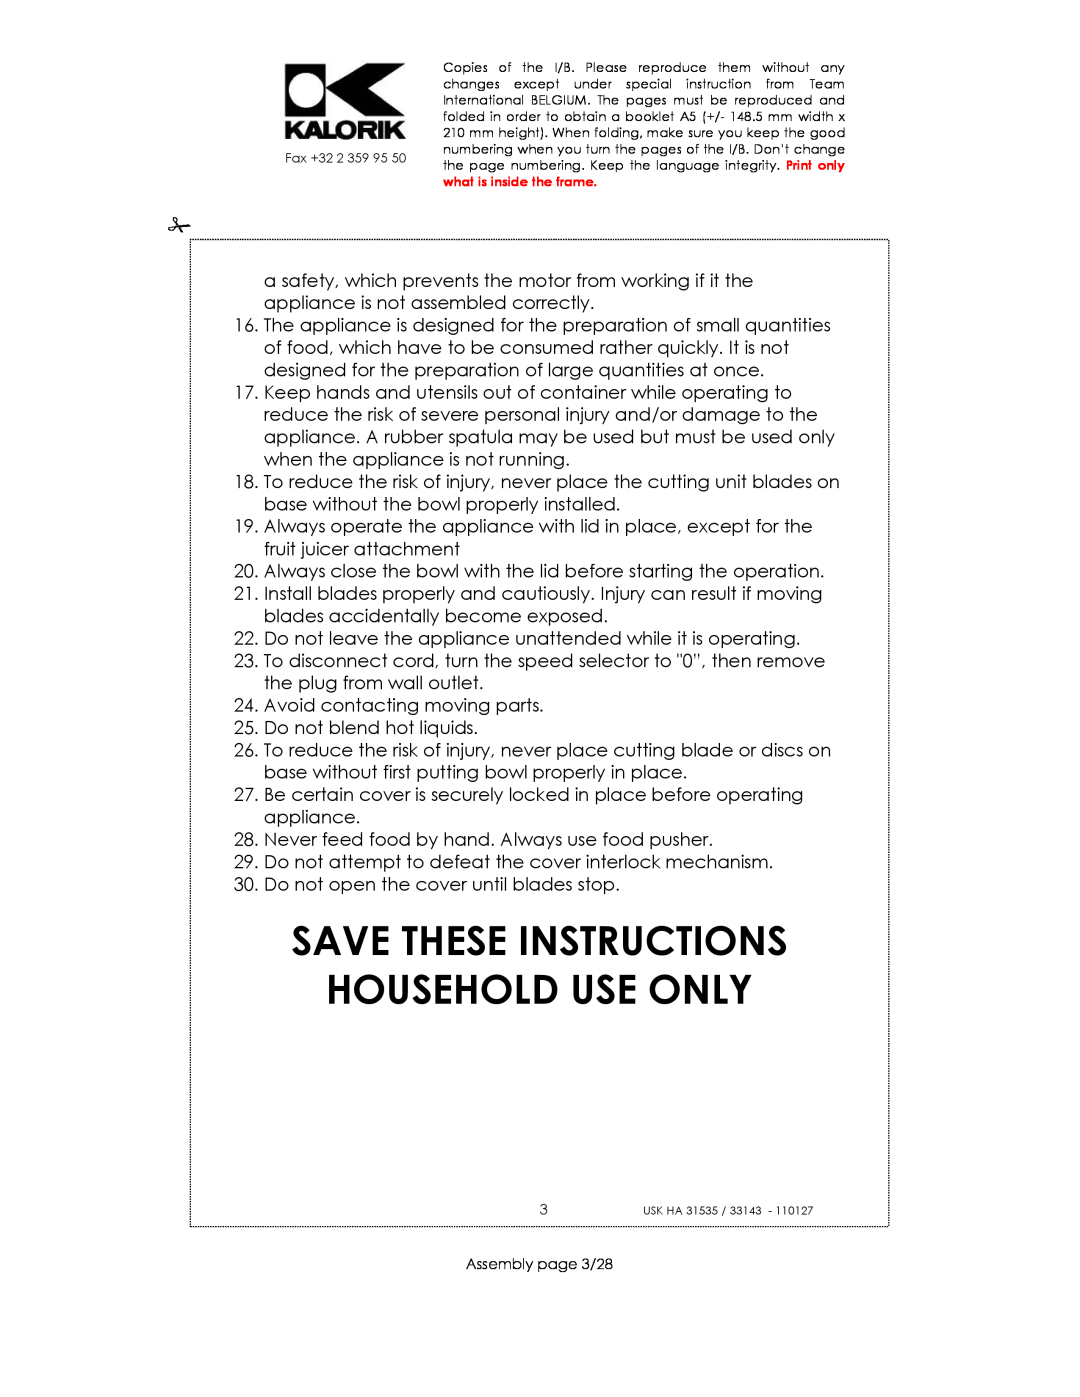 Kalorik USK HA 33143, USK HA 31535 manual Save These Instructions Household Use Only 